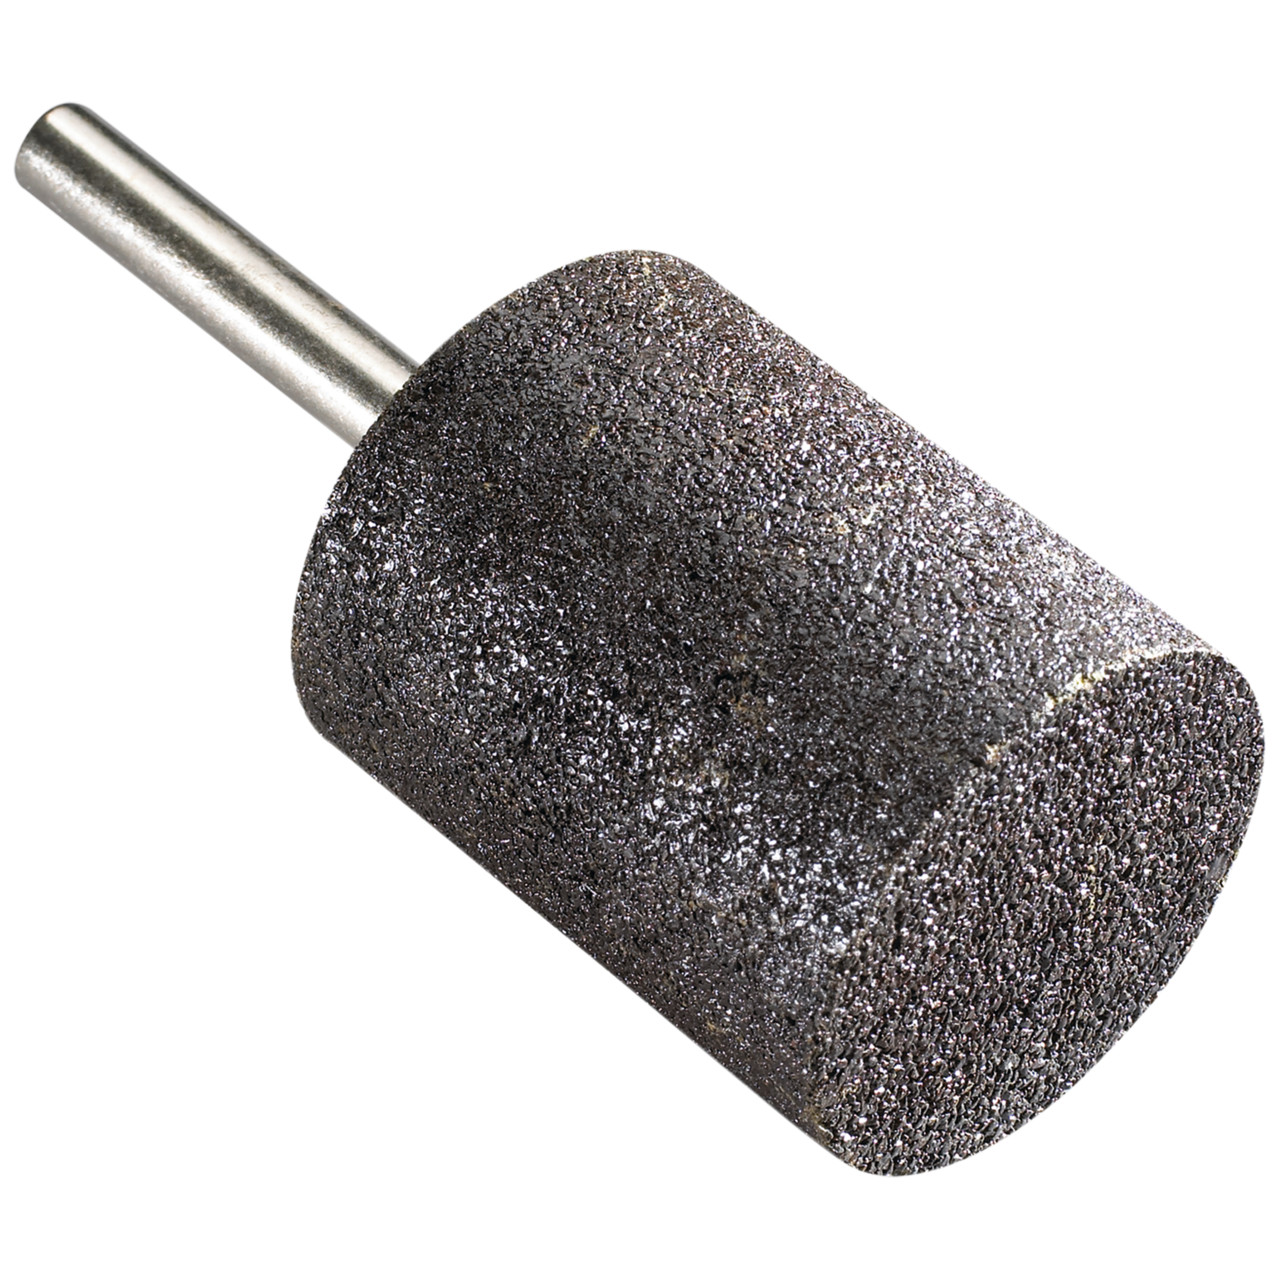 Tyrolit Punti montati in resina DxT-SxL 40x20-6x40 Per acciaio inox, forma: 52ZY - cilindro (punto montato), Art. 682111